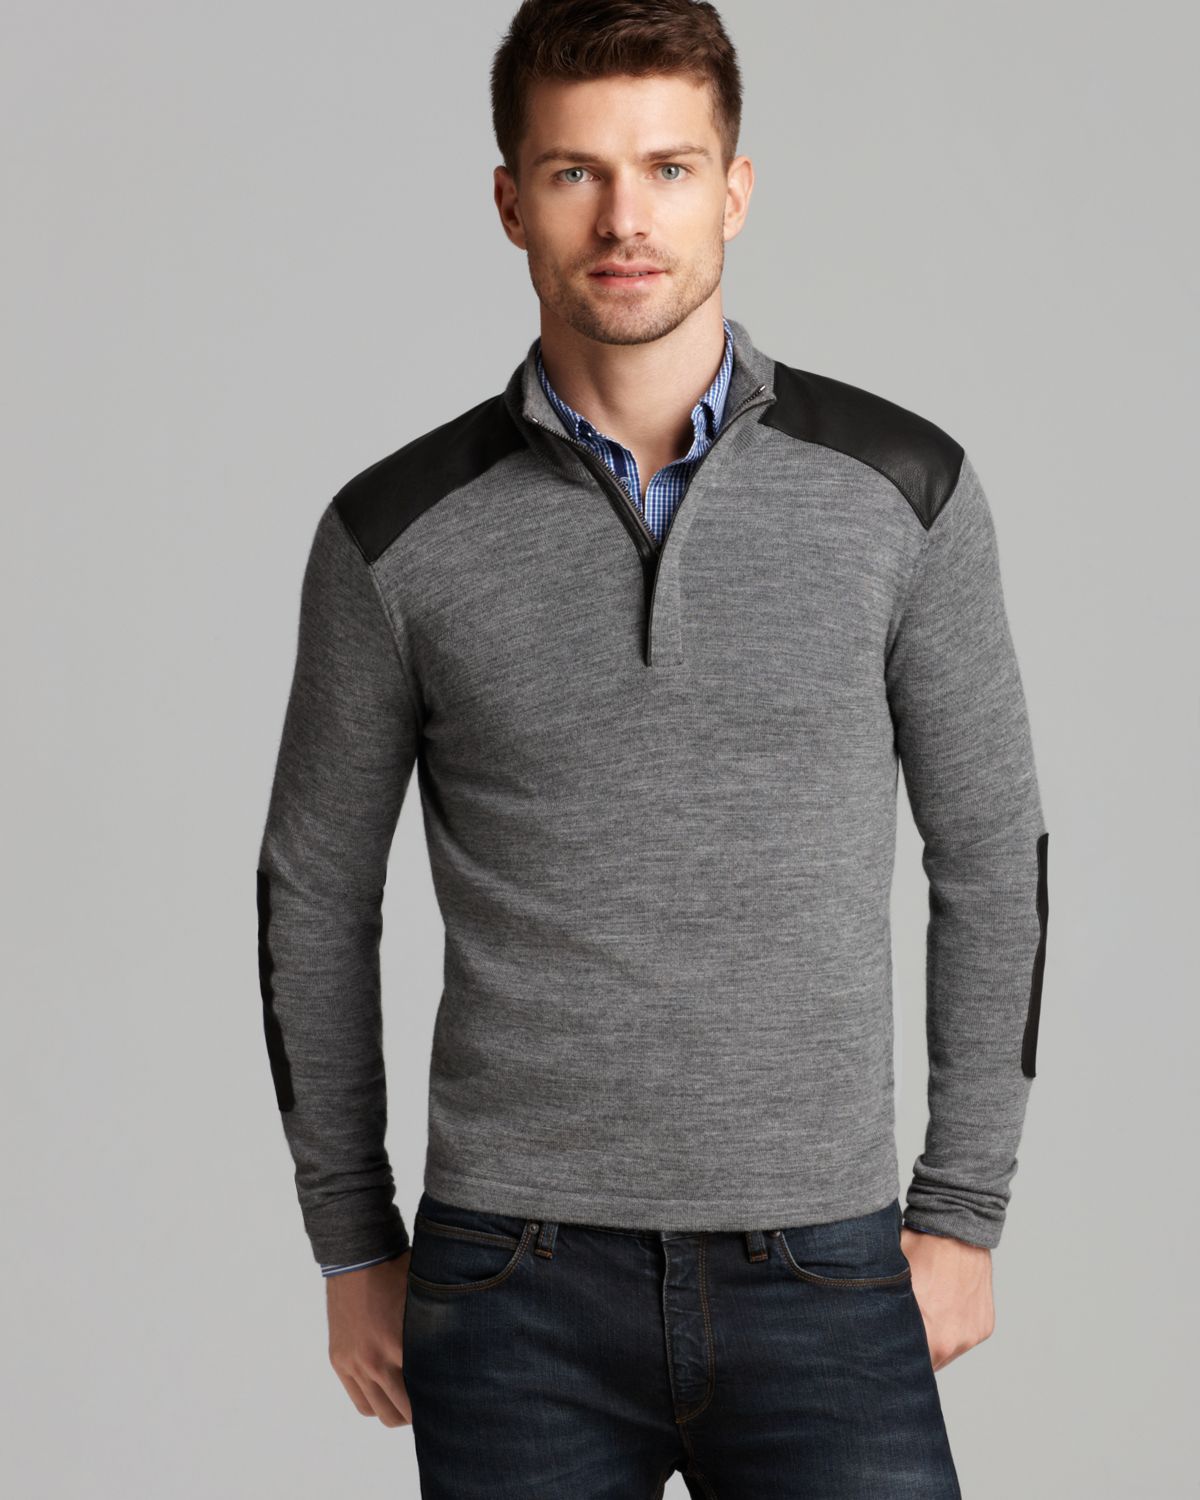 Michael kors Leather Trim Half Zip Sweater in Gray for Men | Lyst